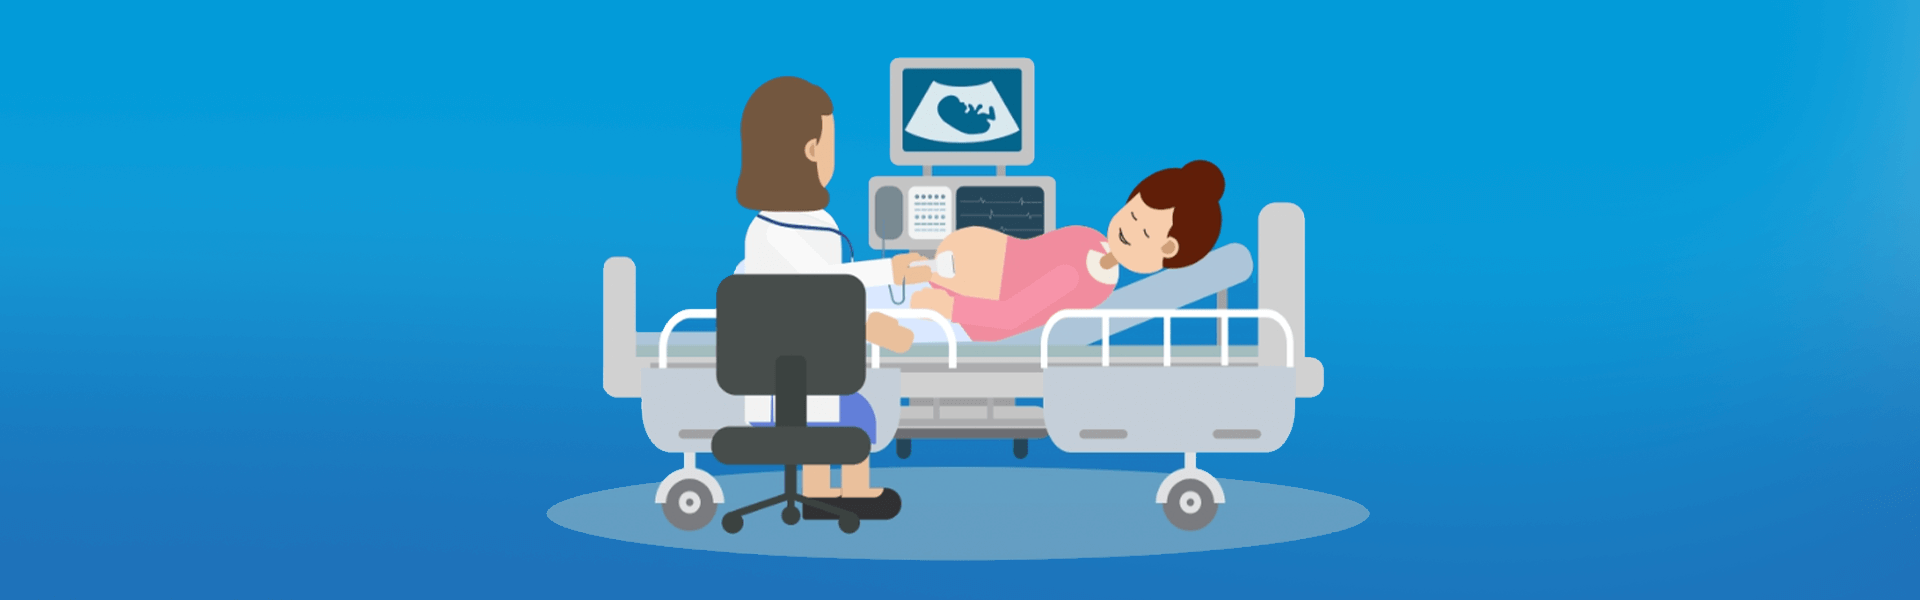 USG Abdomen Scan | Pregnancy Care - Manipal Hospitals